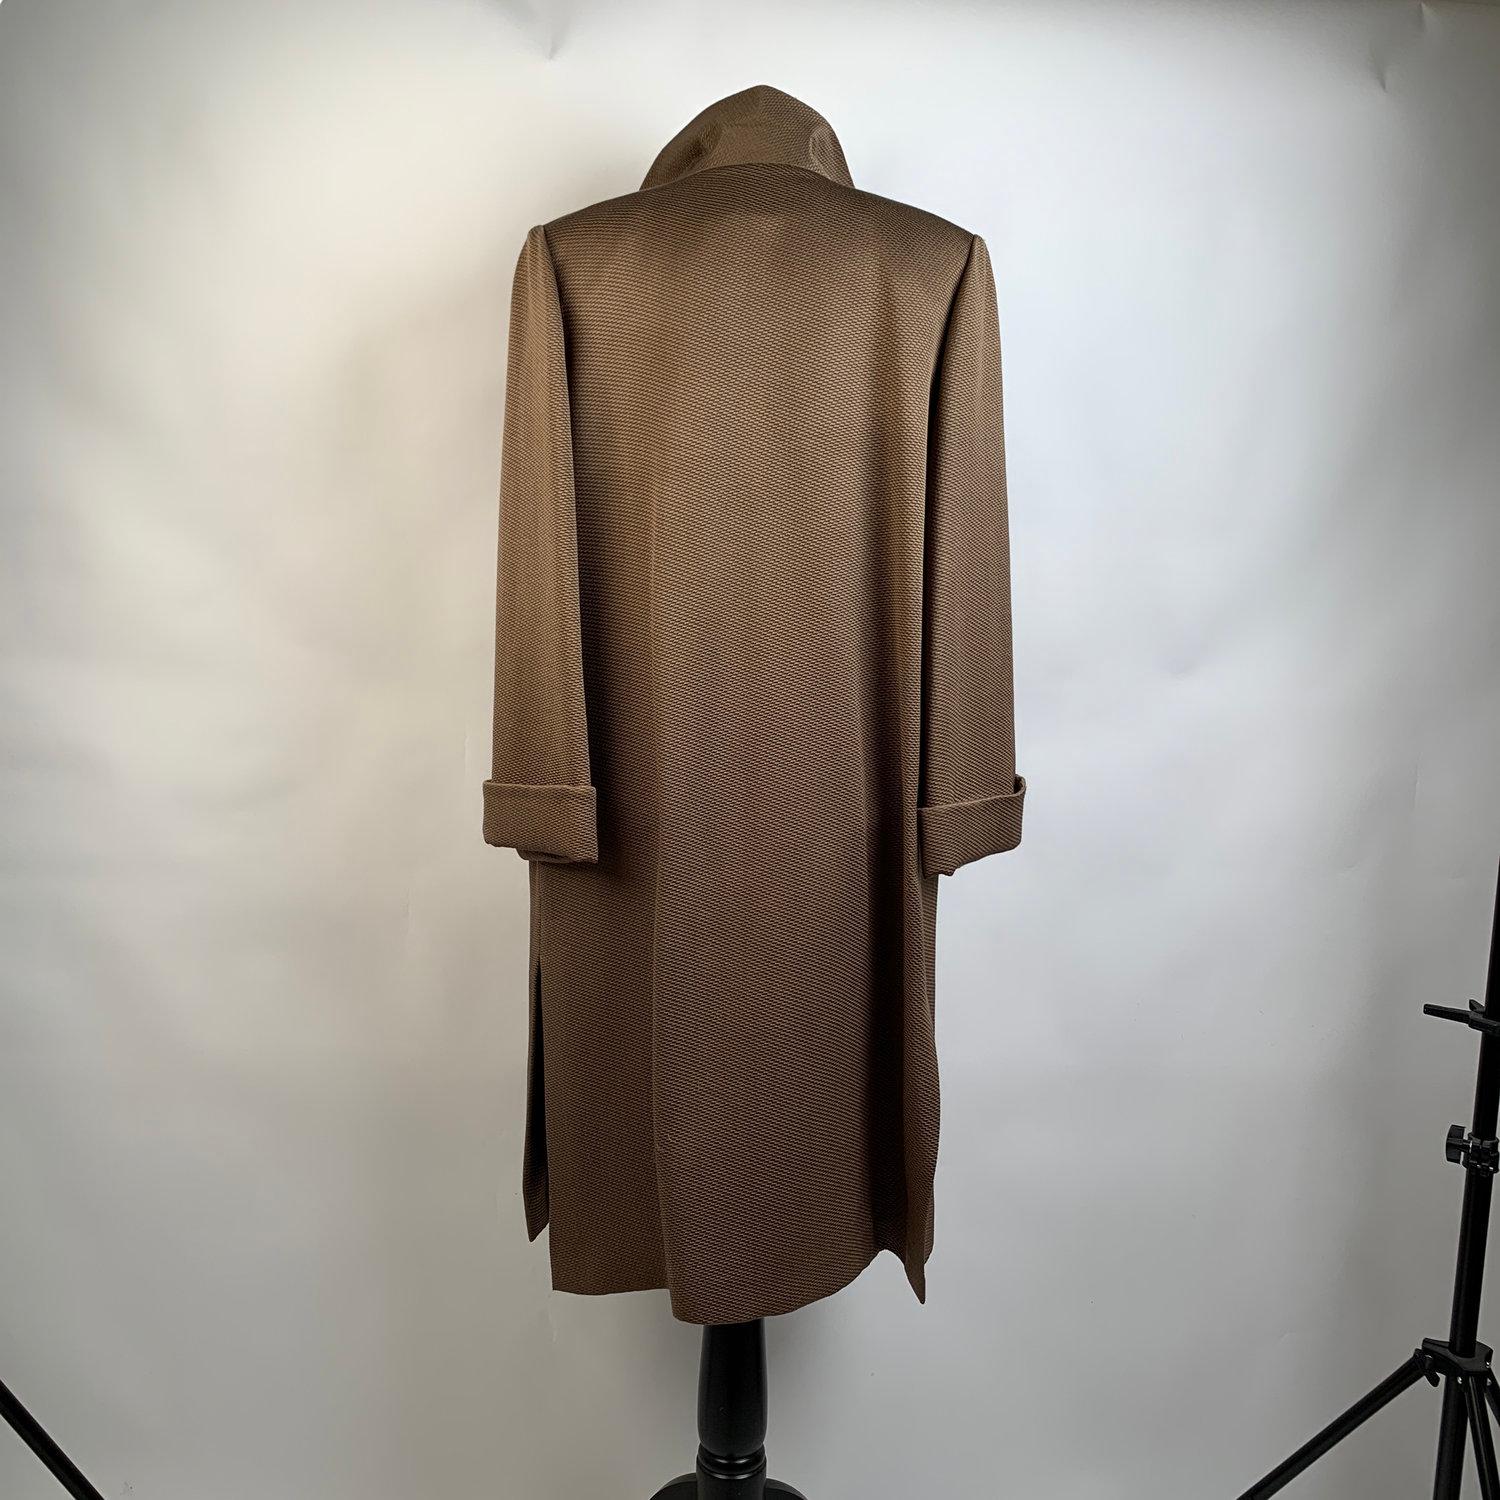 Galitzine Couture Vintage Light Brown Dustcoat Open Front Coat 1